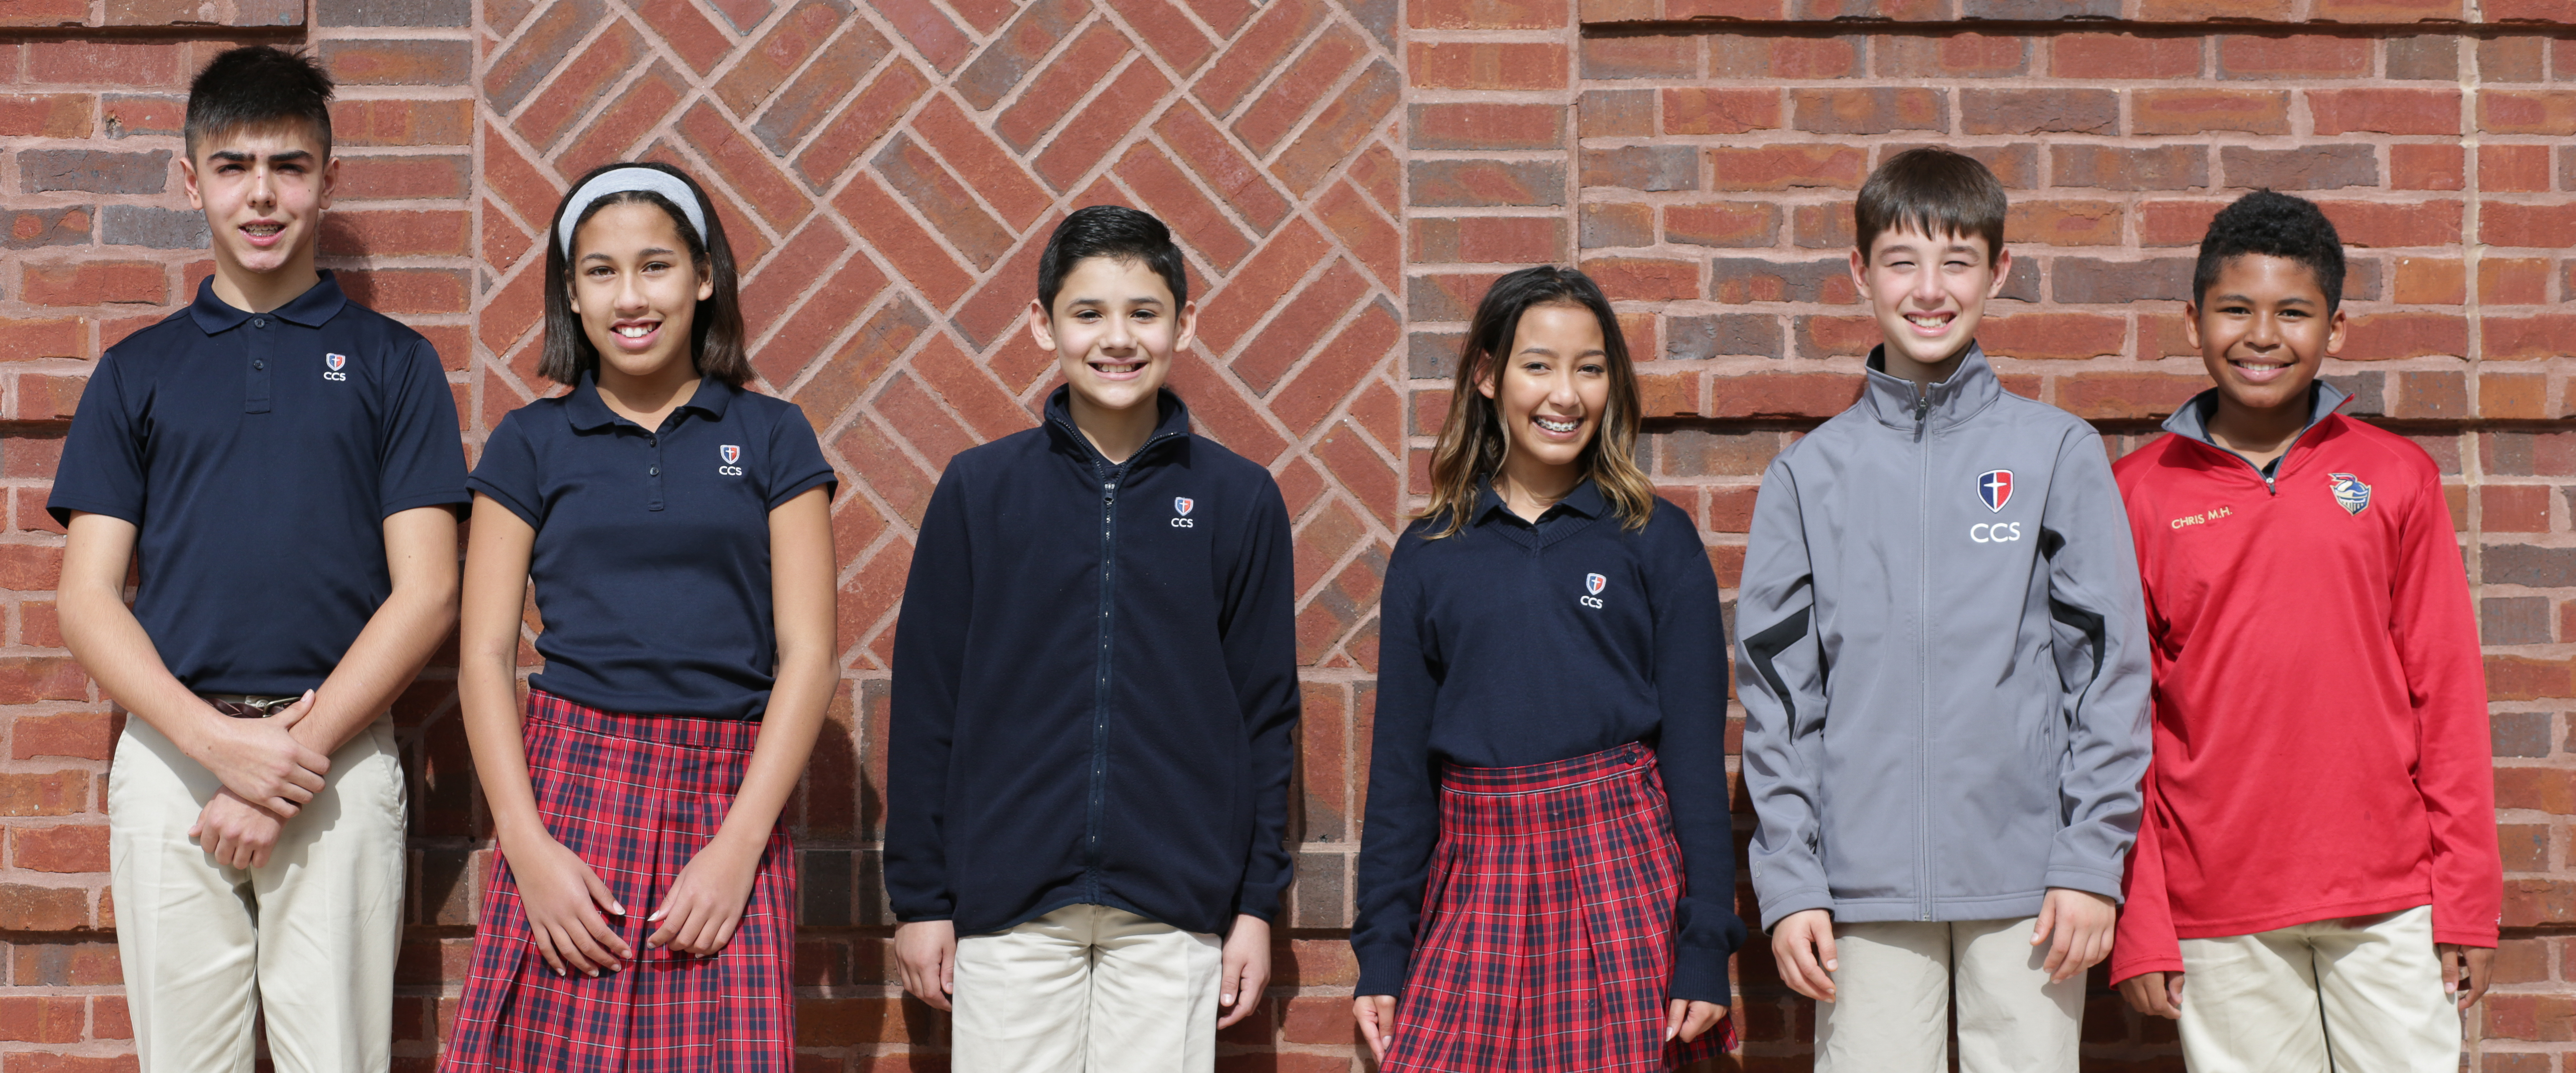 Student Dress Code - Concord Christian School